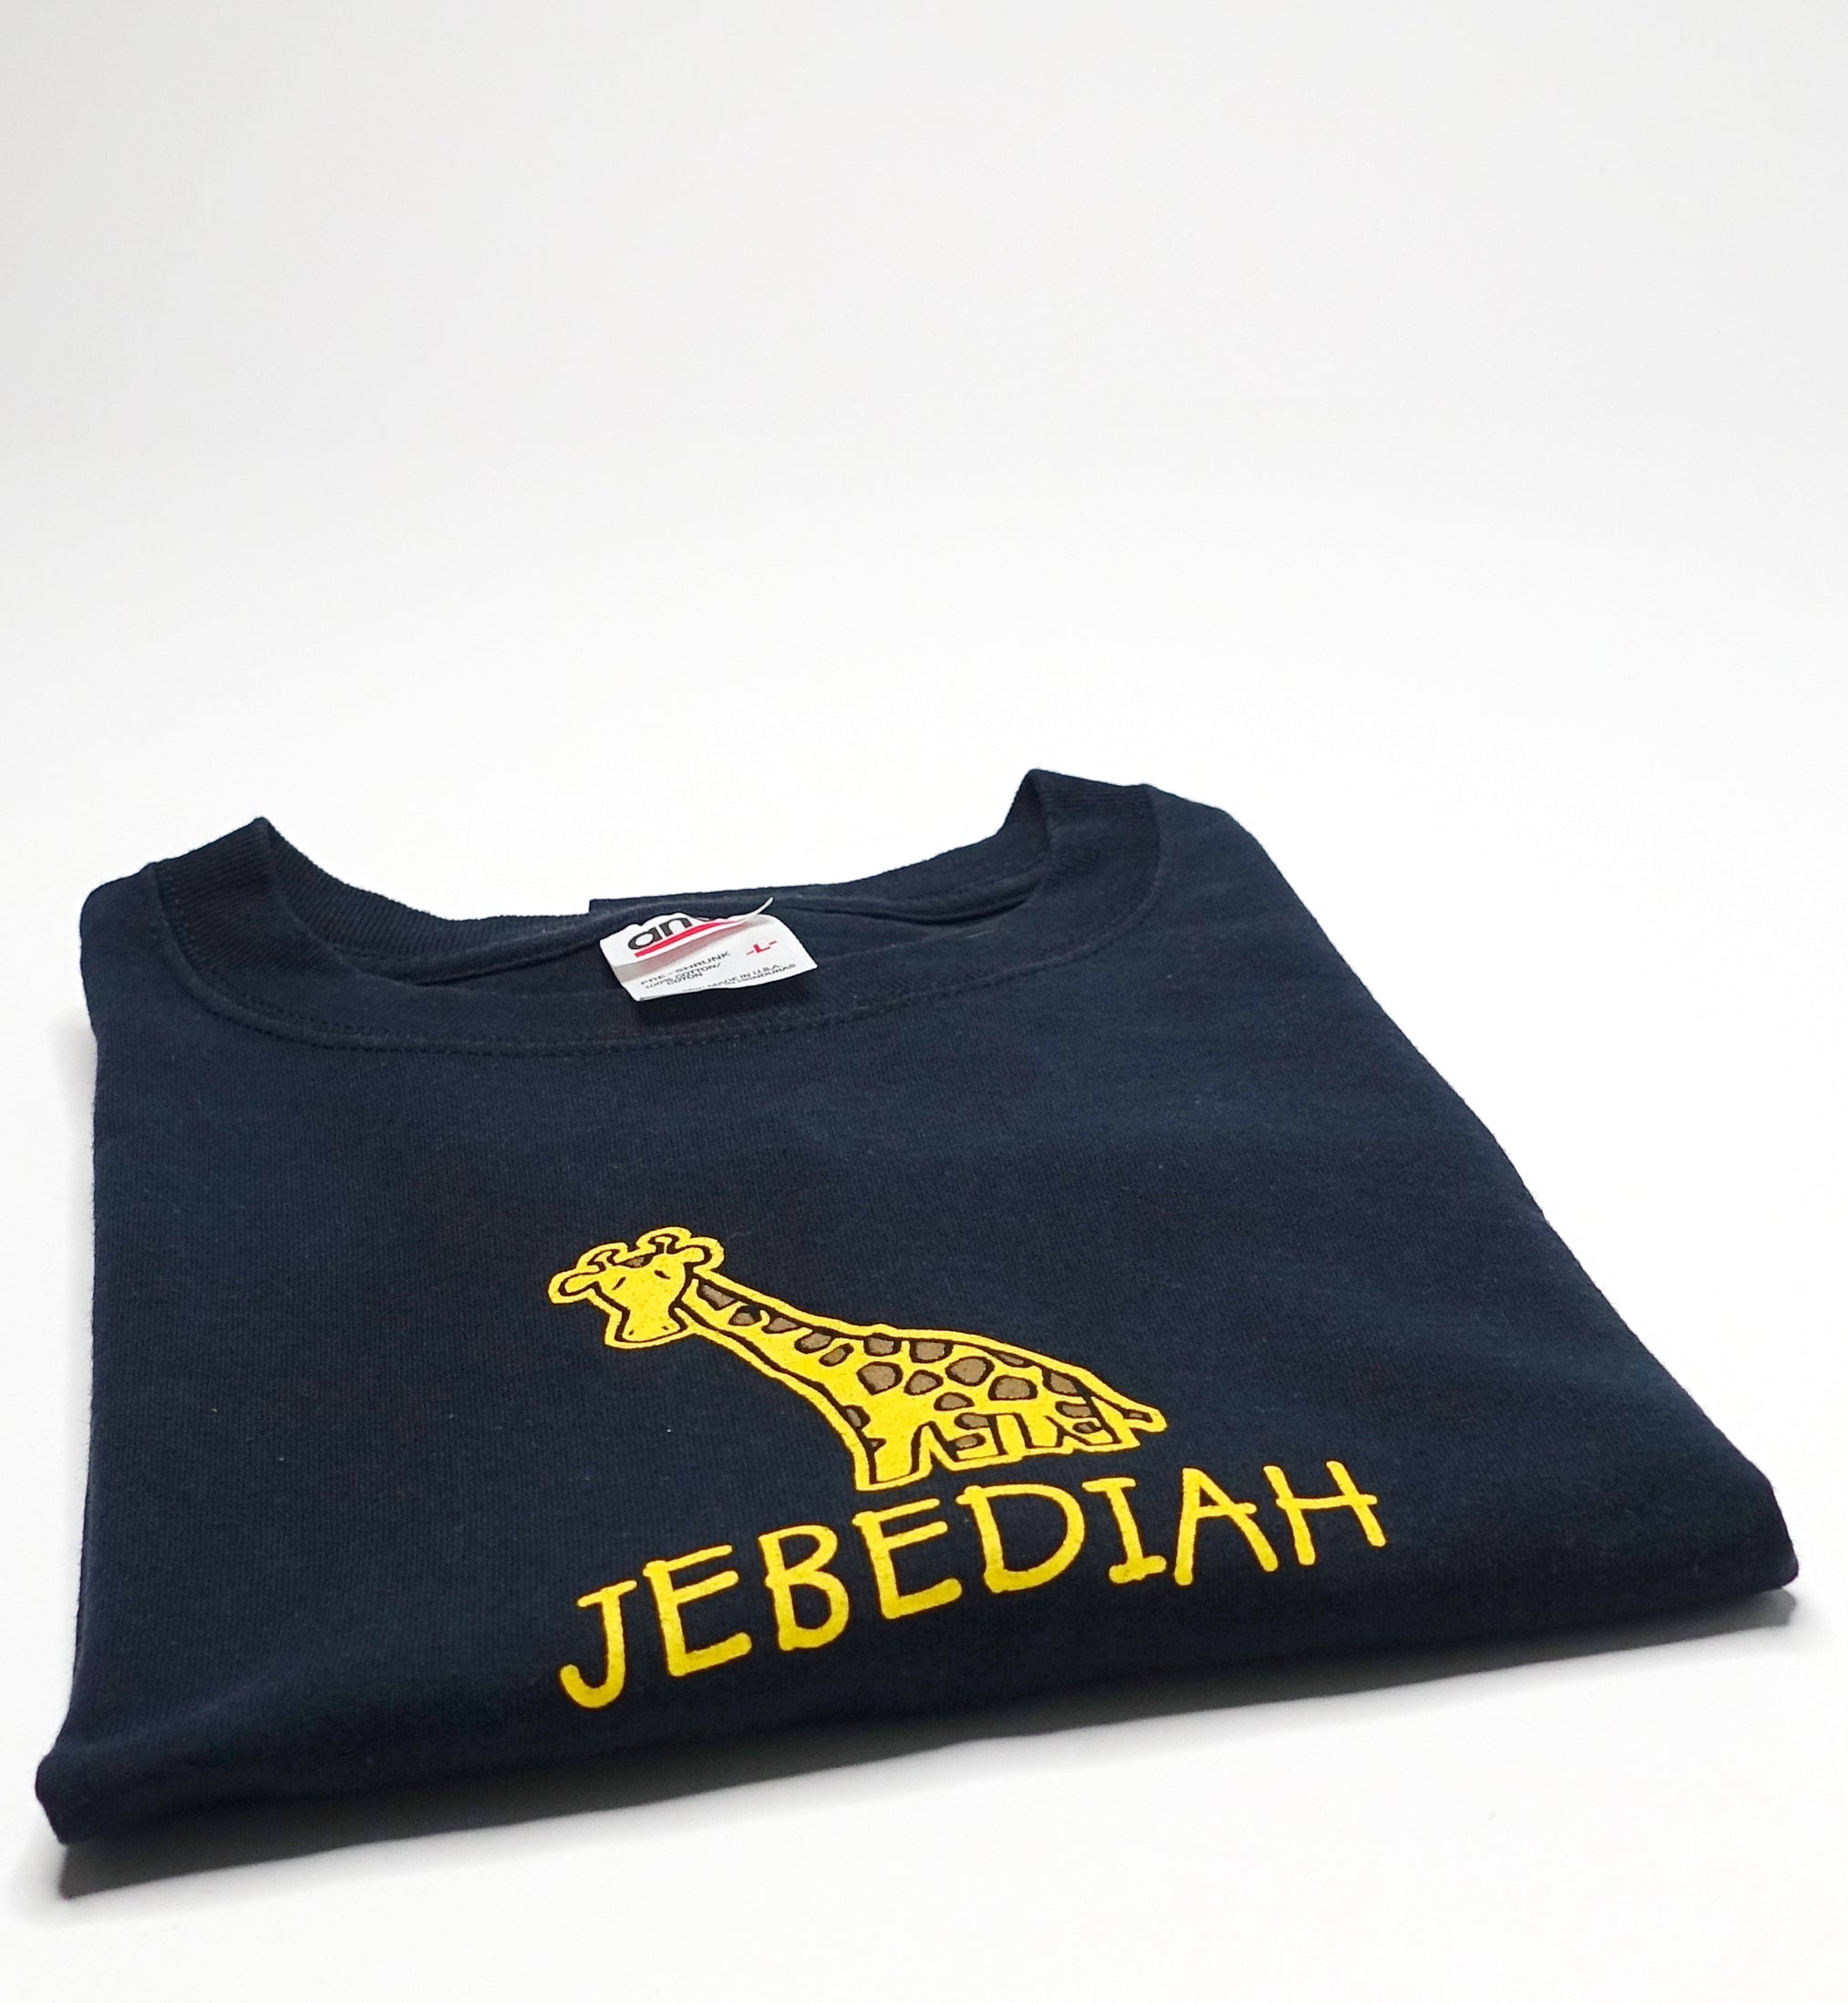 Jebediah - Giraffe 90's Tour Shirt Size Large